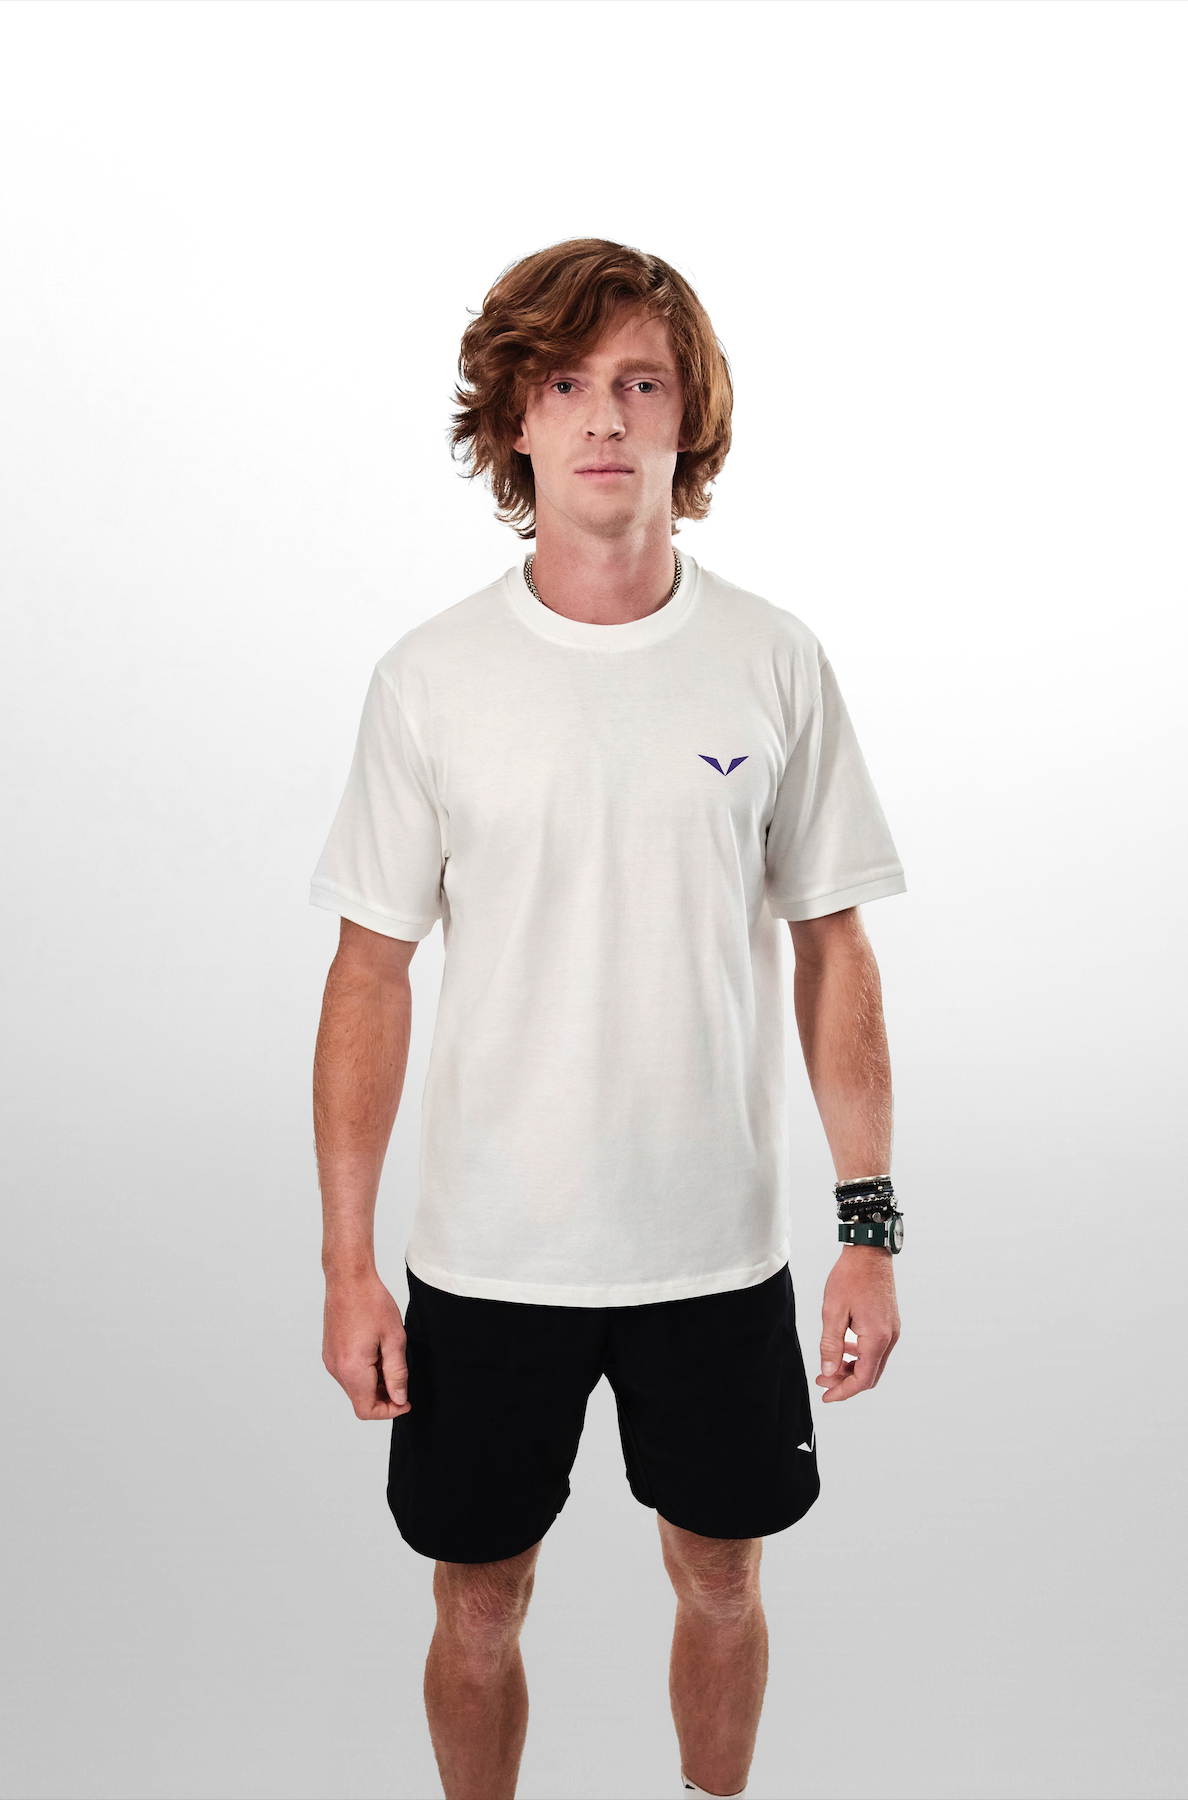 MiniRackets White Practice Shirt